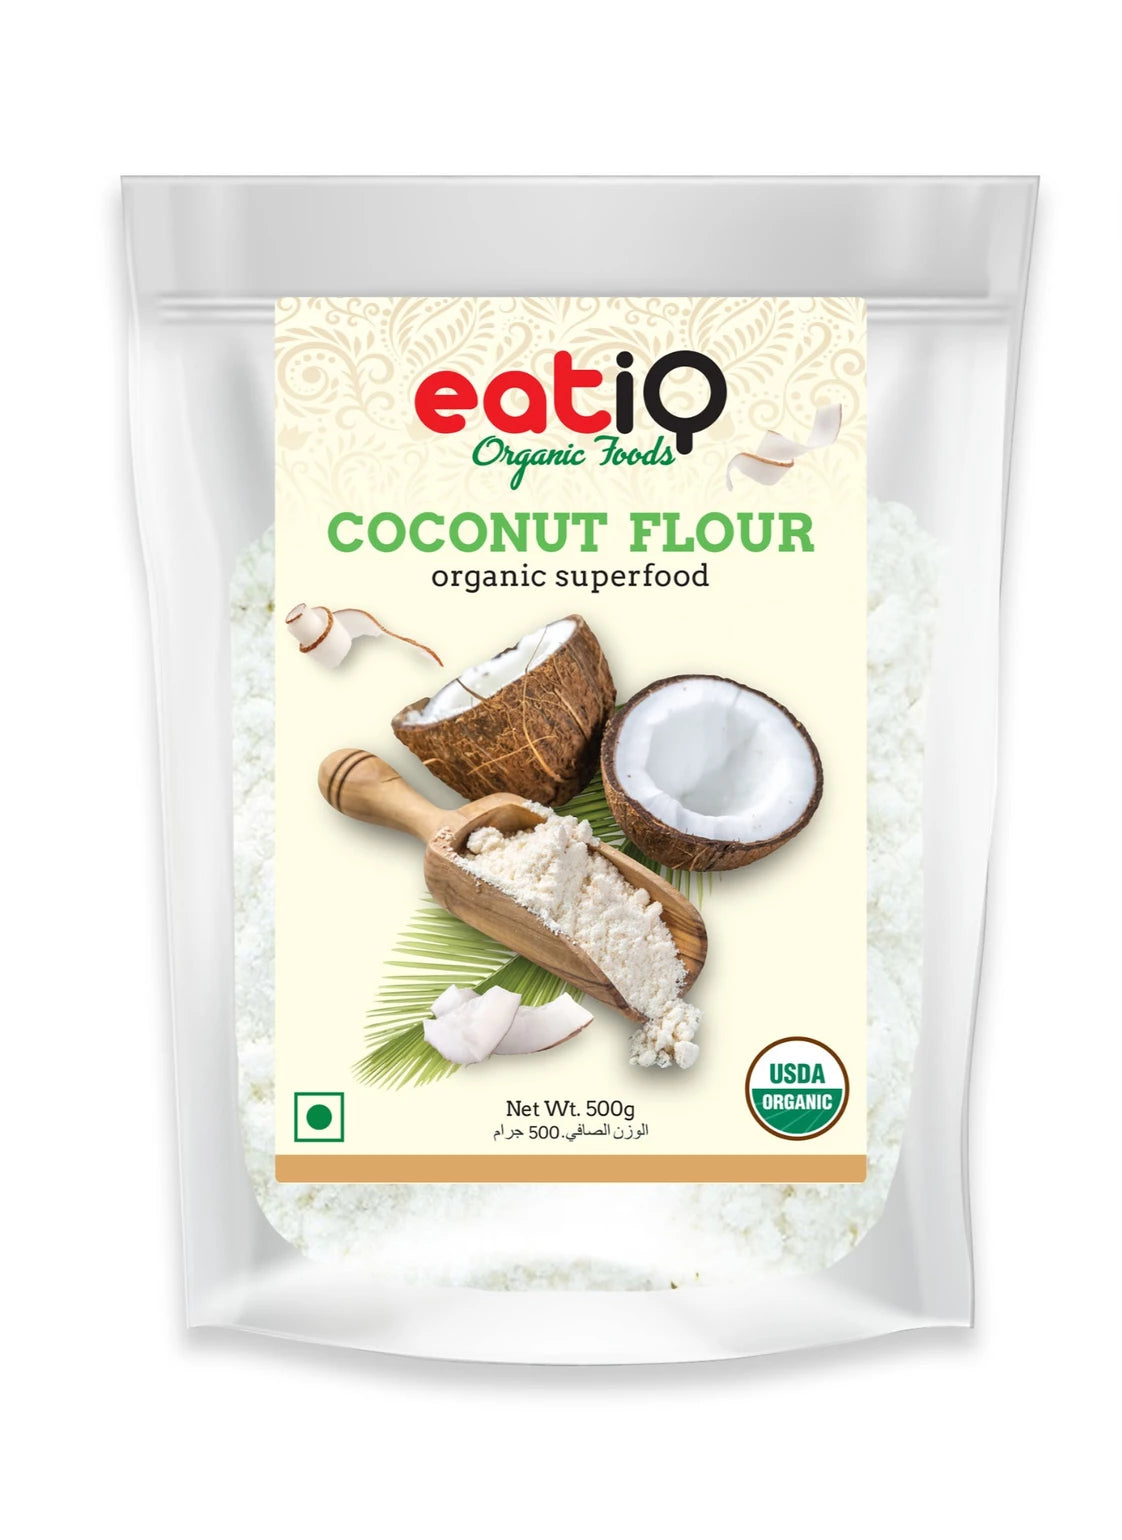 EATIQ ORGANIC FOODS Organic Coconut Flour, 500g